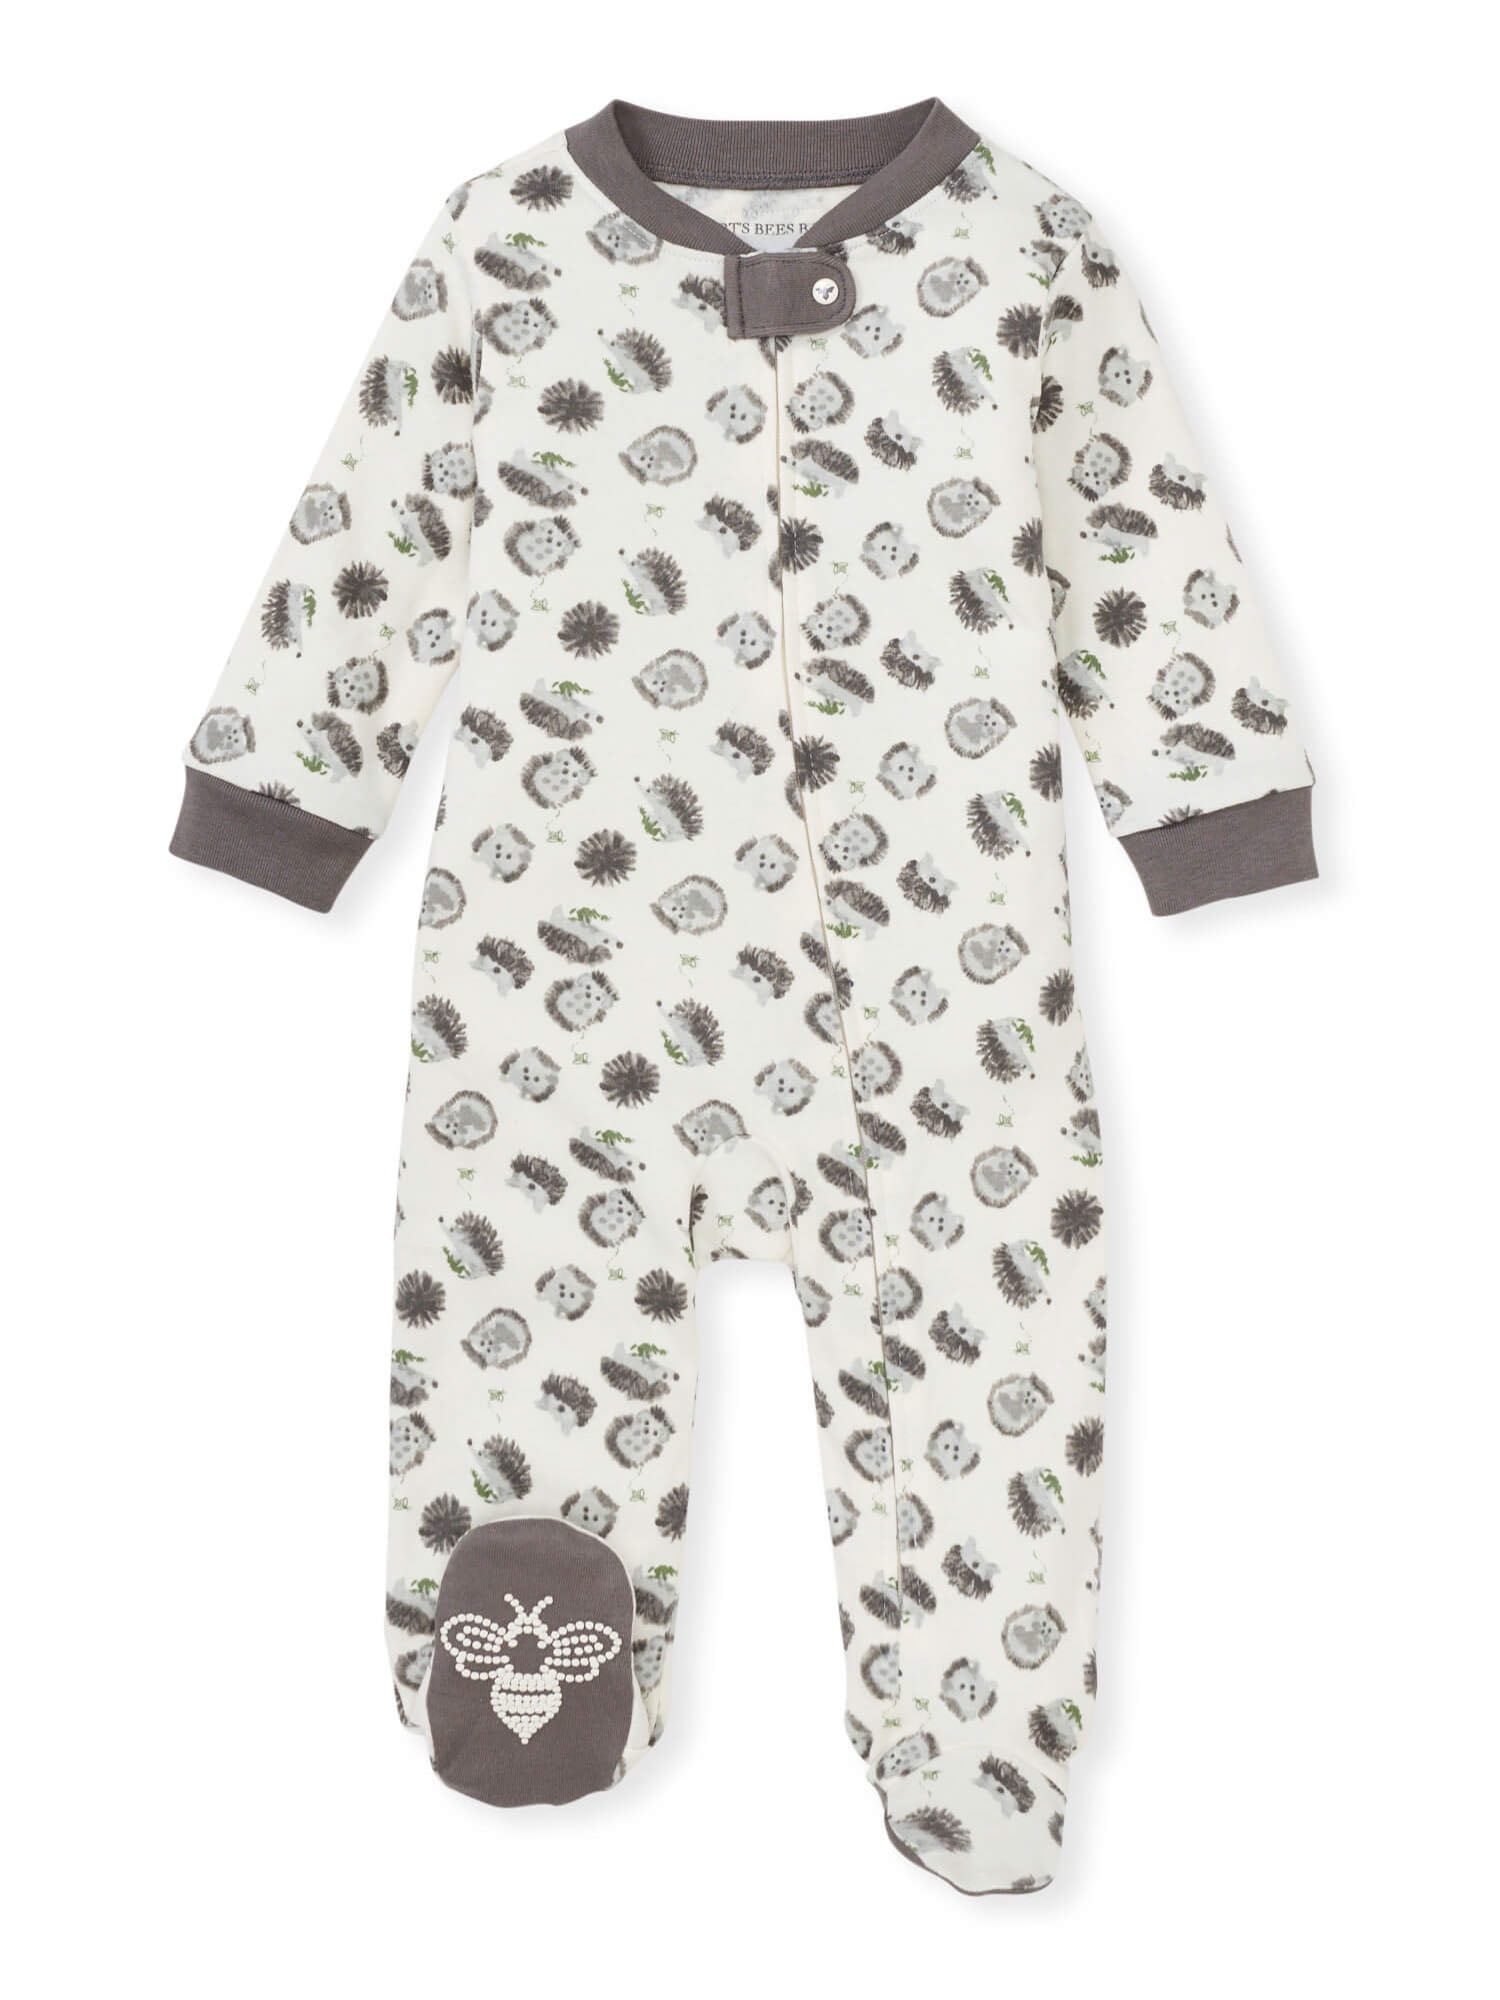 100% Organic Cotton One-Piece Romper Jumpsuit Zip Front Pjs Burt's Bees Baby-Boys Sleep and Play Pajamas 